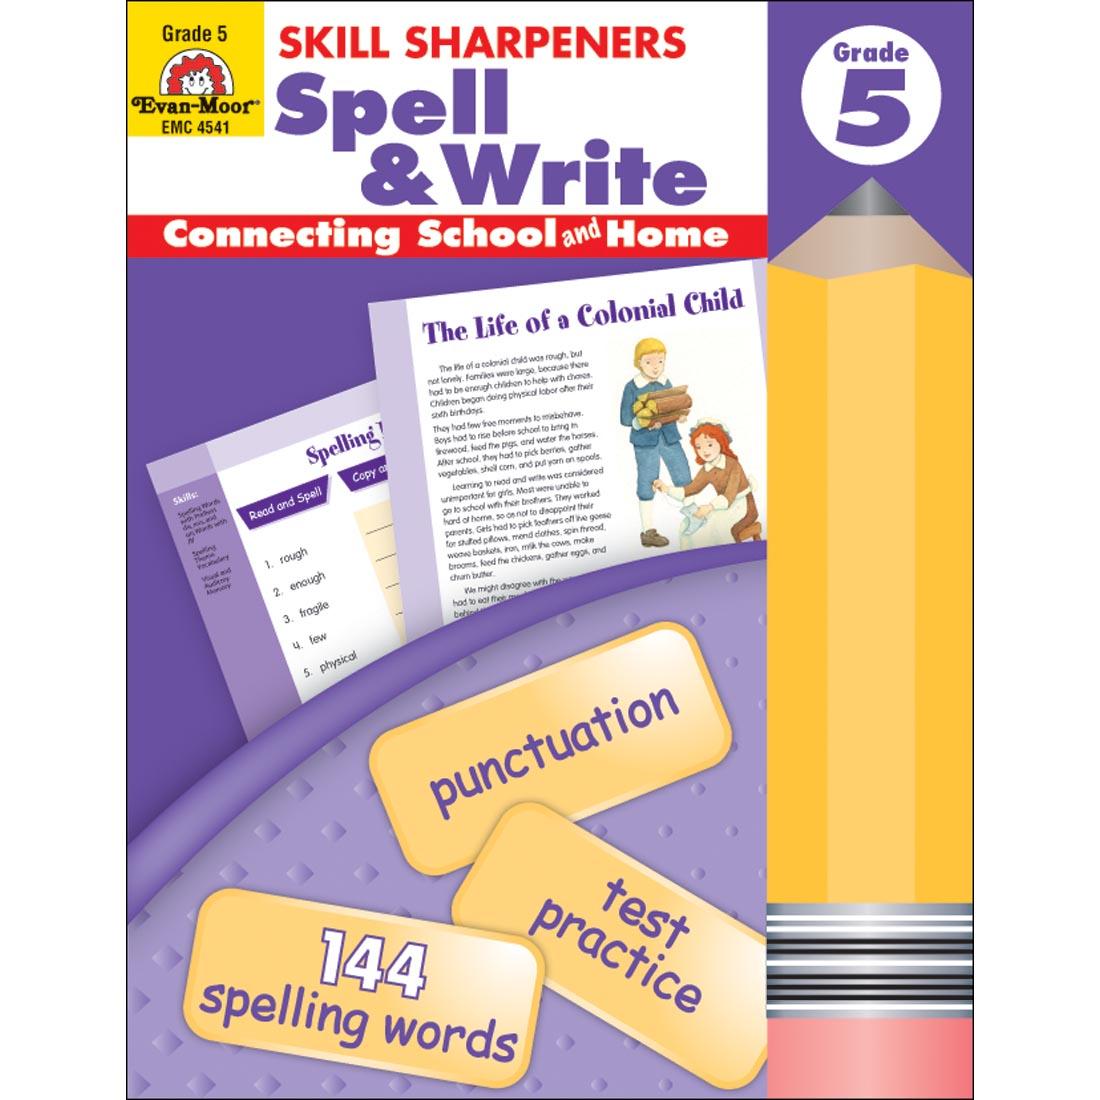 Skill Sharpeners Spell & Write by Evan-Moor Grade 5